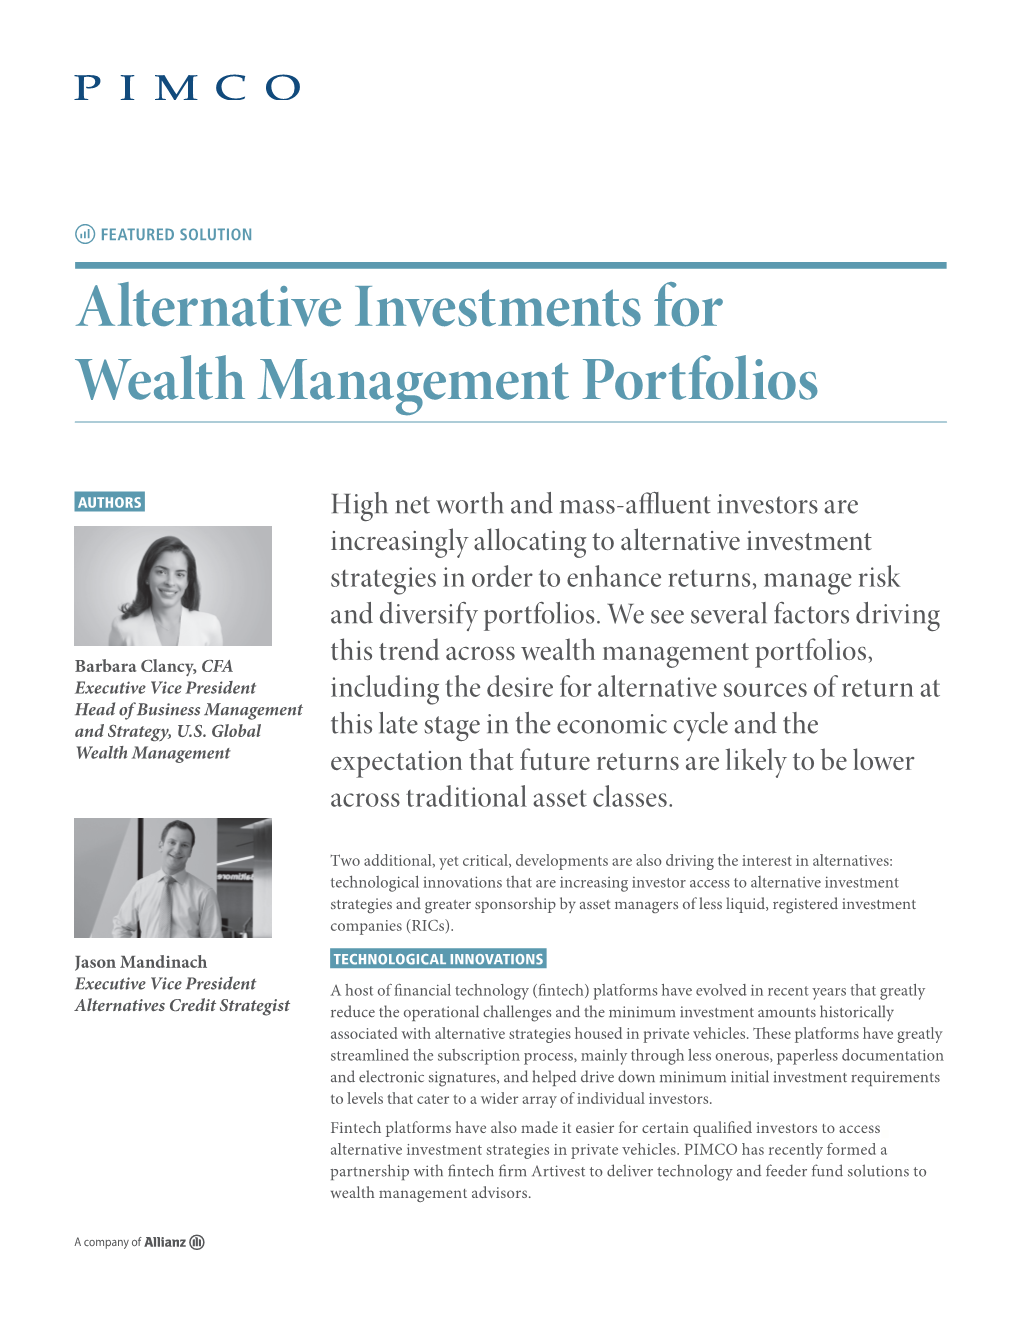 Alternative Investments for Wealth Management Portfolios